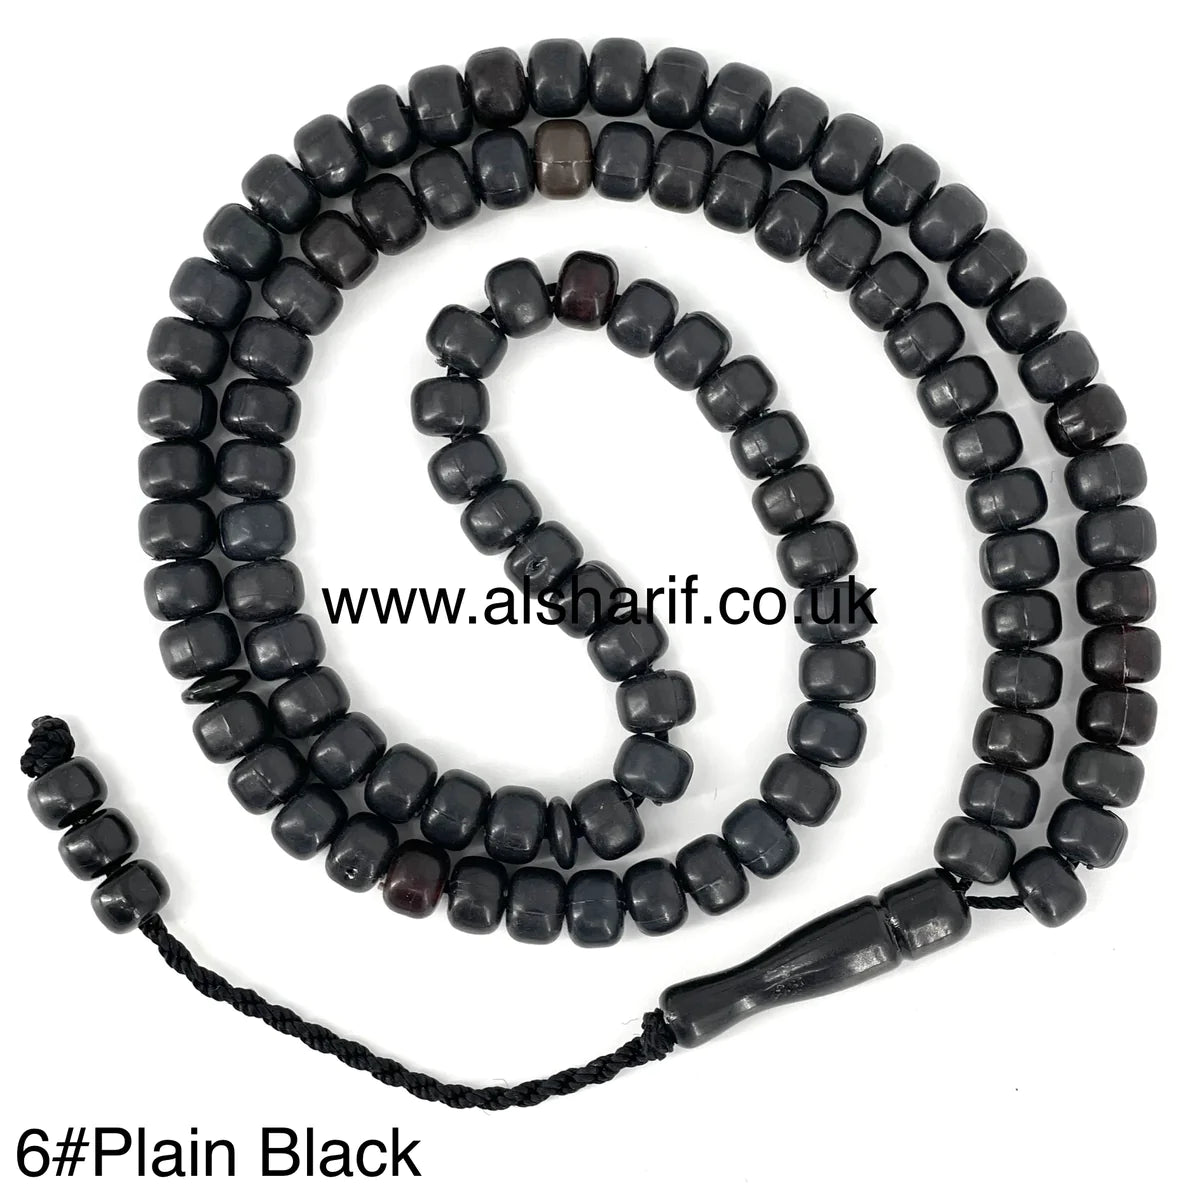 Tasbeeh 99 Beads 6#Plain Black